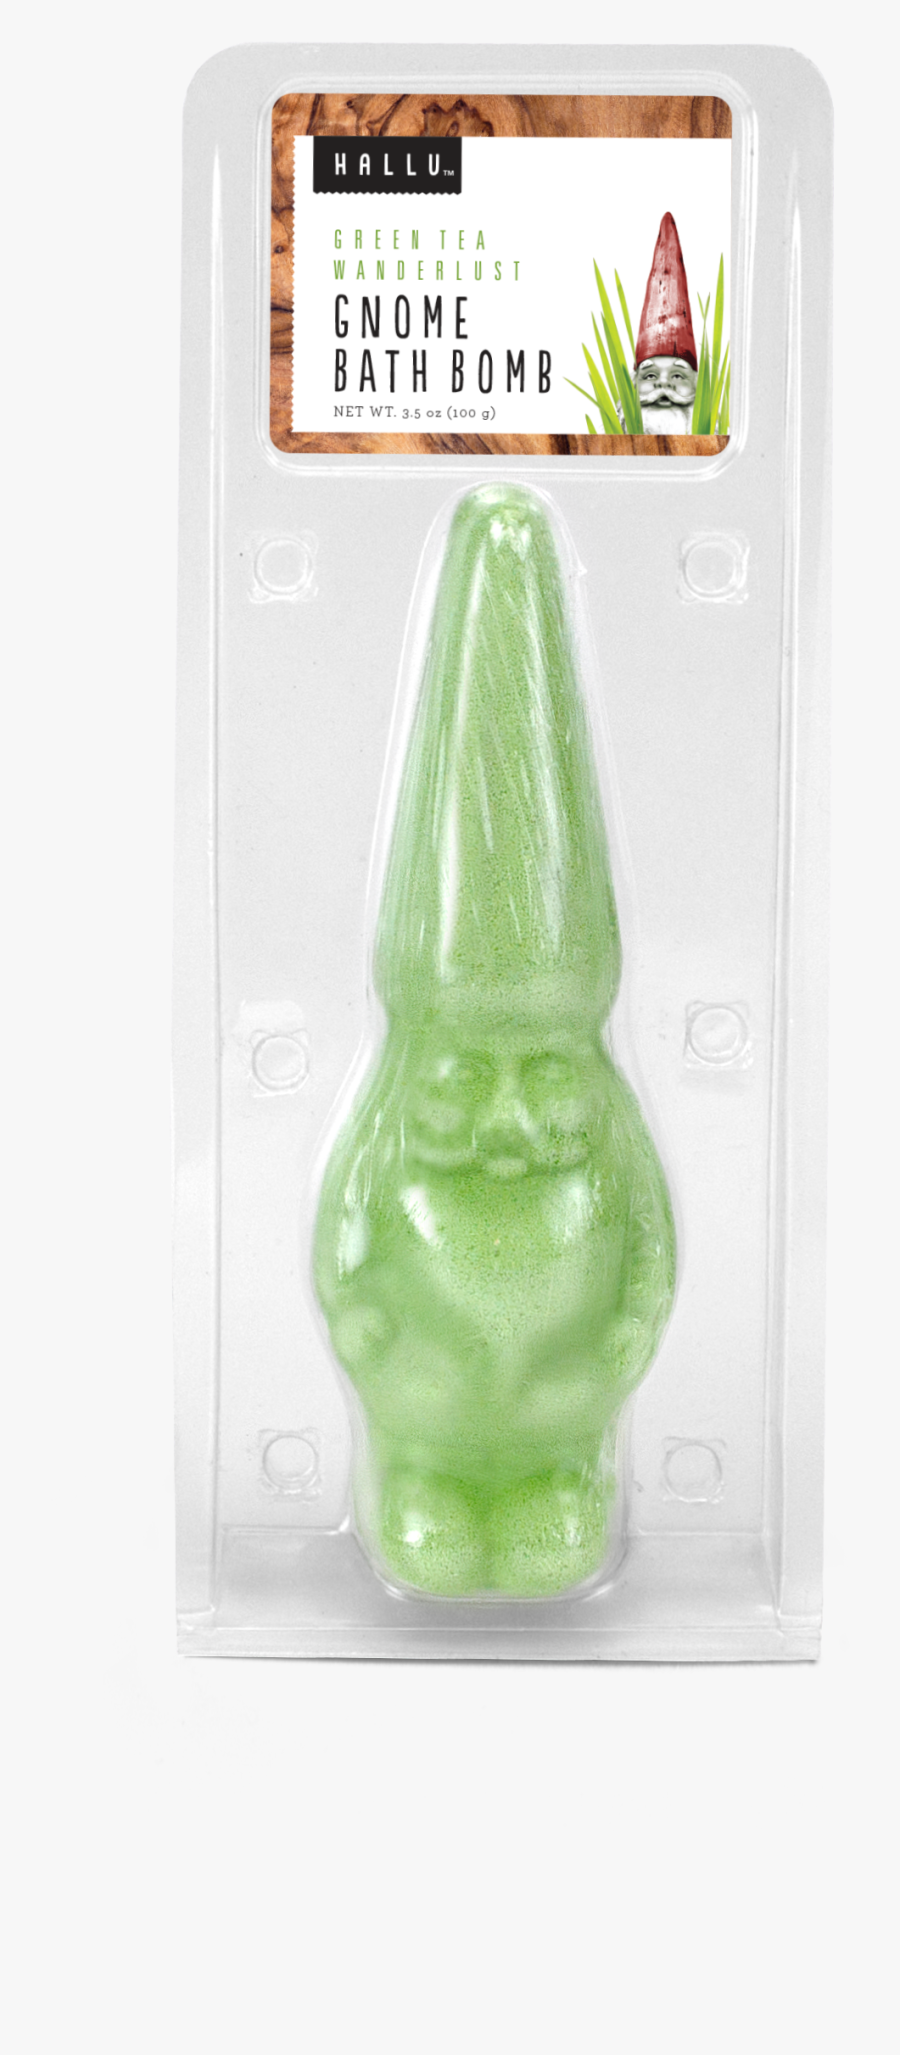 Hallu Garden Gnome Bath Bomb Green Tea Wanderlust Scent - Rabbit, Transparent Clipart